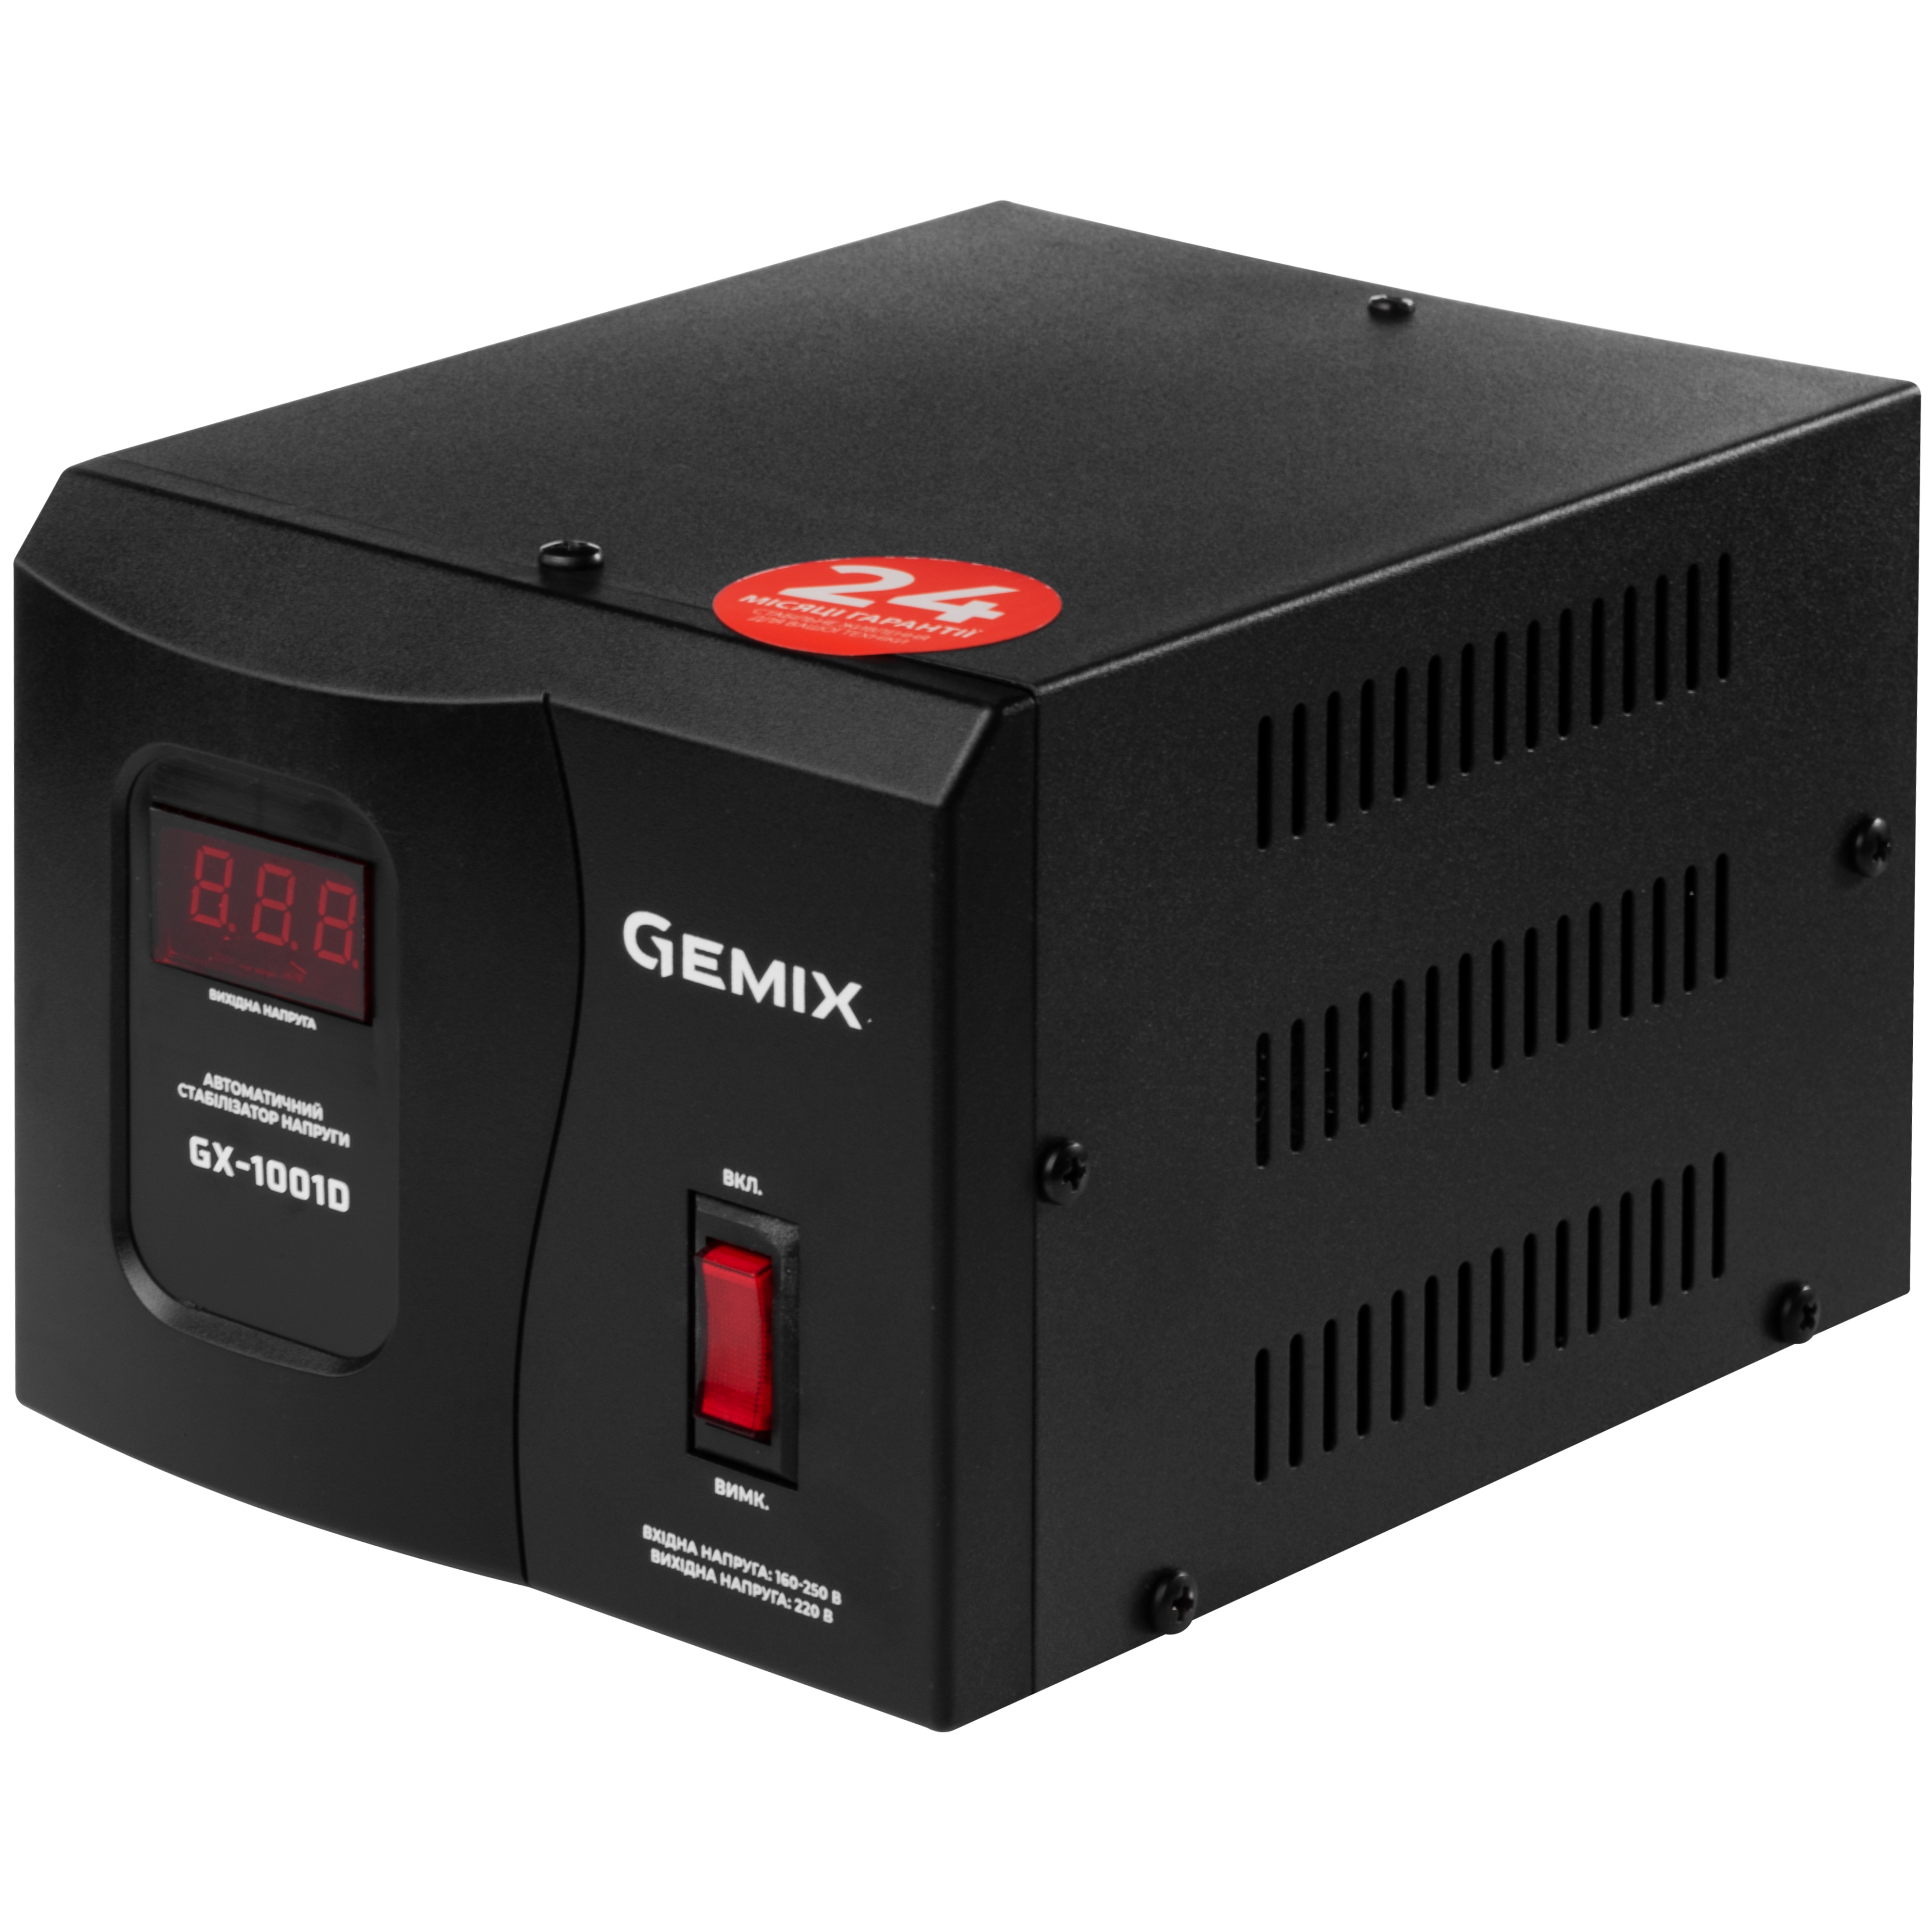 Характеристики стабилизатор напряжения Gemix GX-1001D